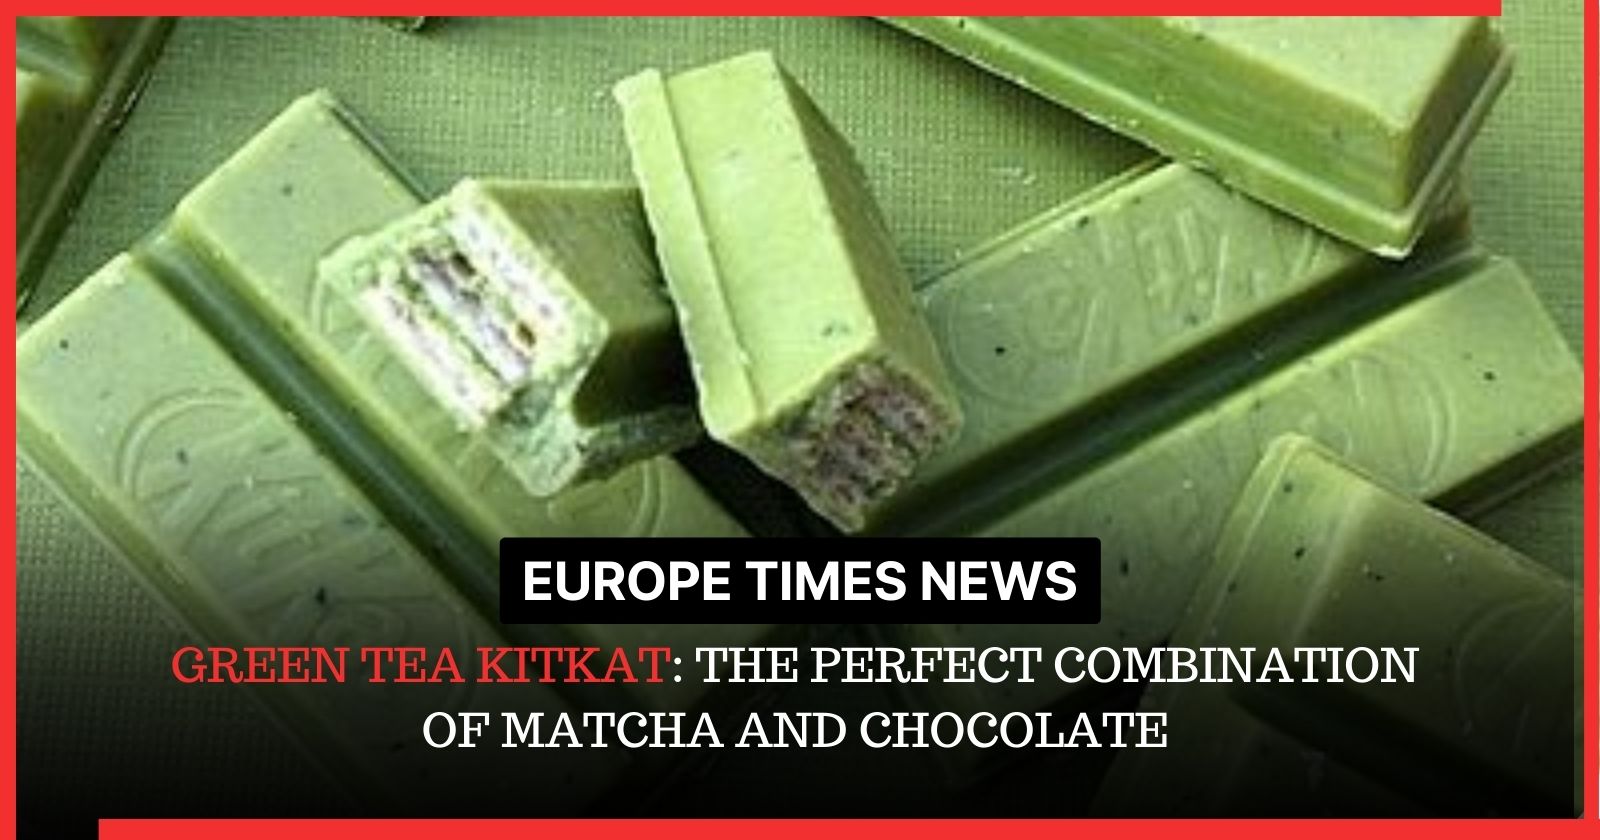 Green Tea Kit Kat: The Perfect Combination of Matcha and Chocolate